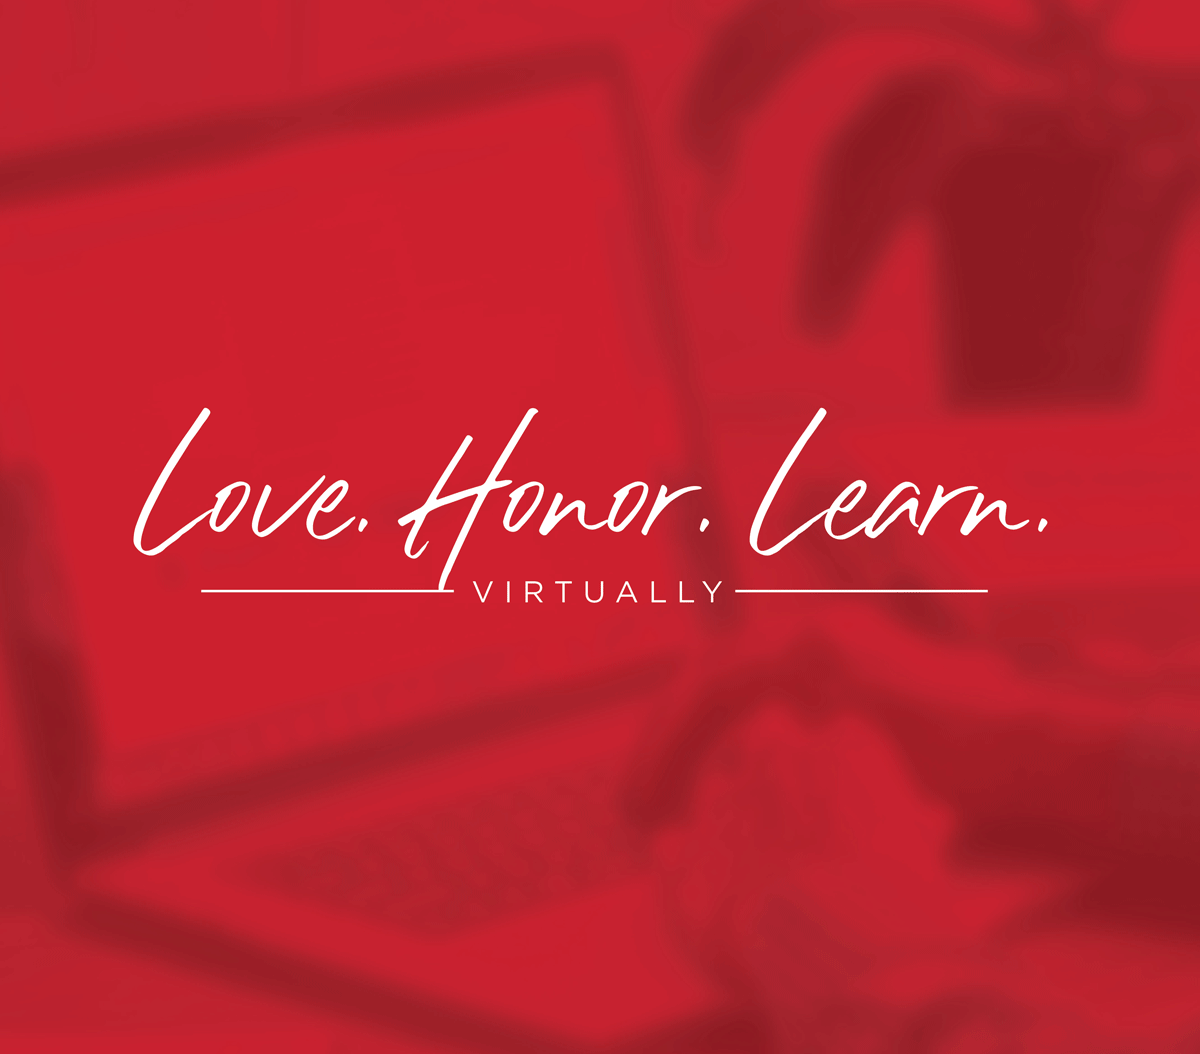 Love. Honor. Learn. Miami Webinars